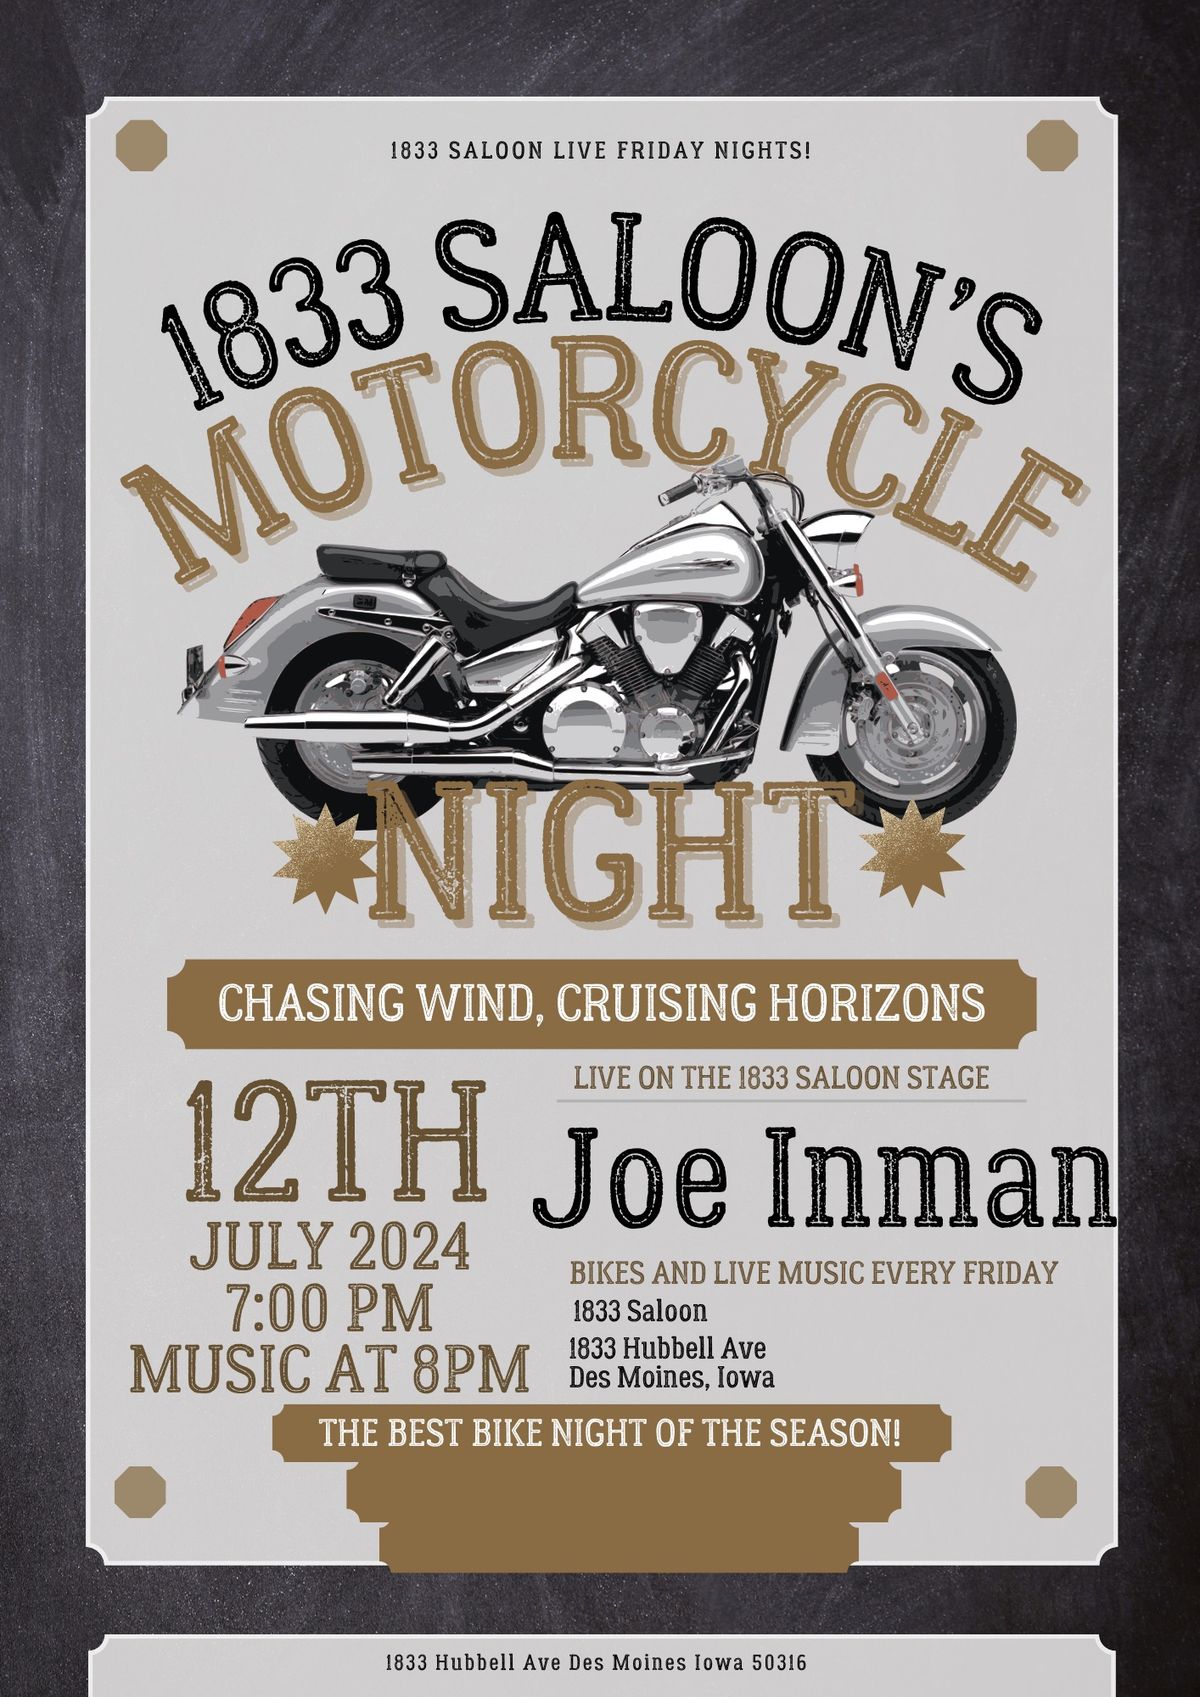 Joe Inman, LIVE at 1833 Saloon! And Bike Night!